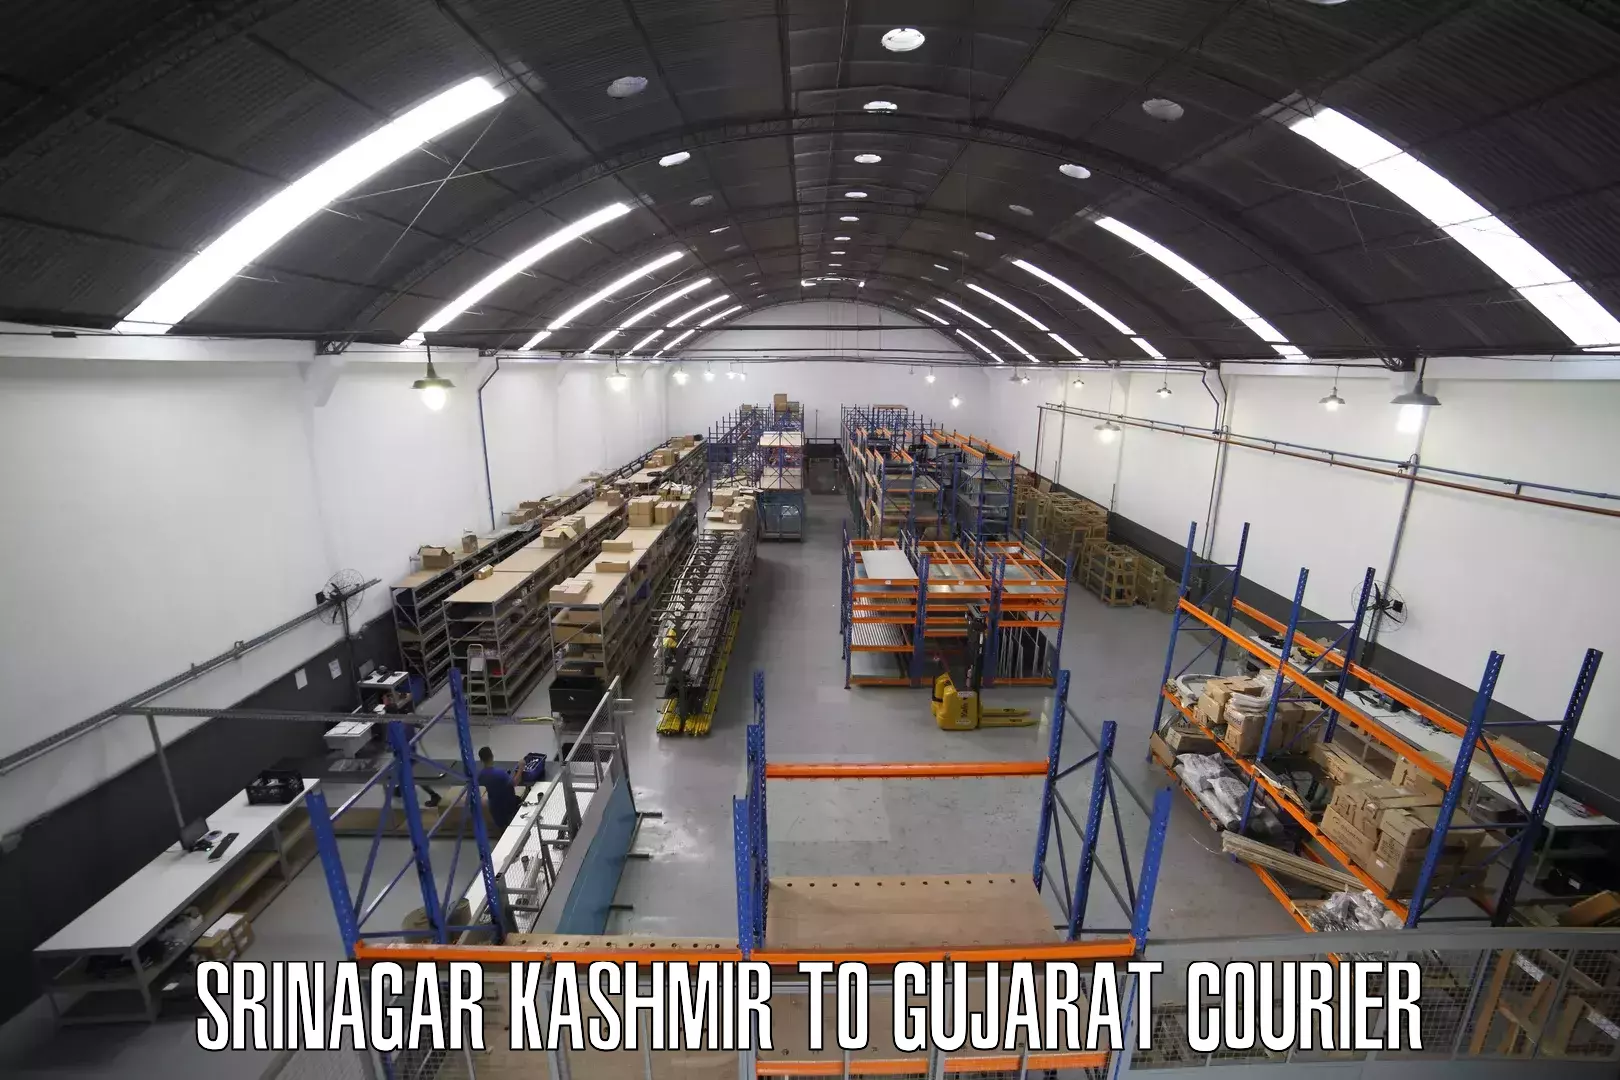 Package delivery network Srinagar Kashmir to Gujarat